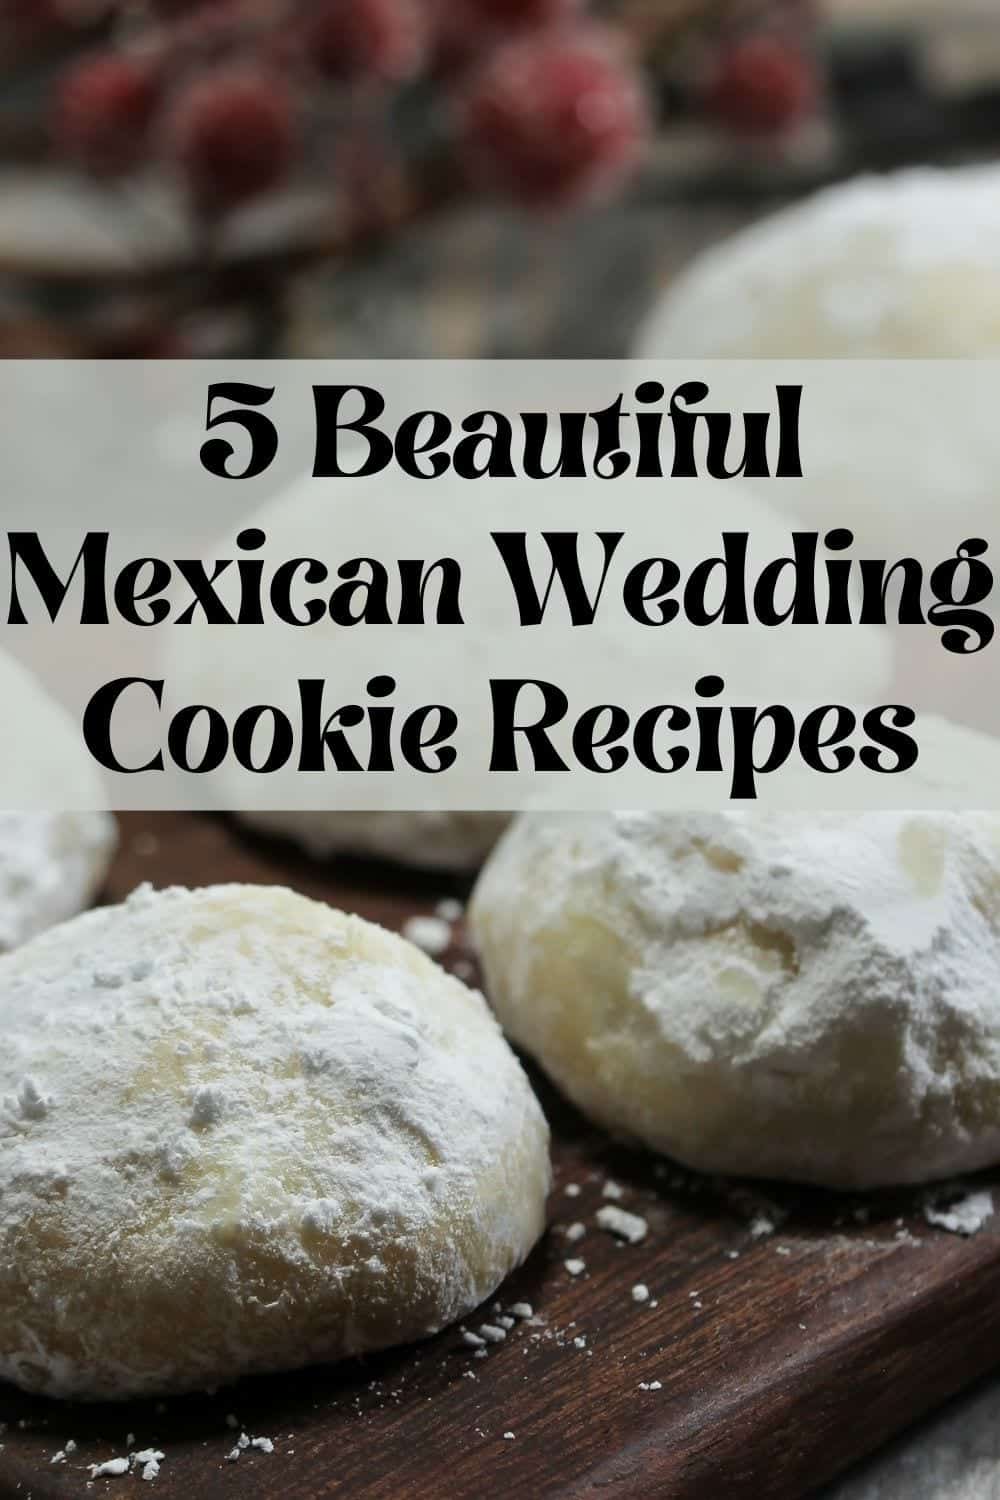 Mexican wedding cookies recipes